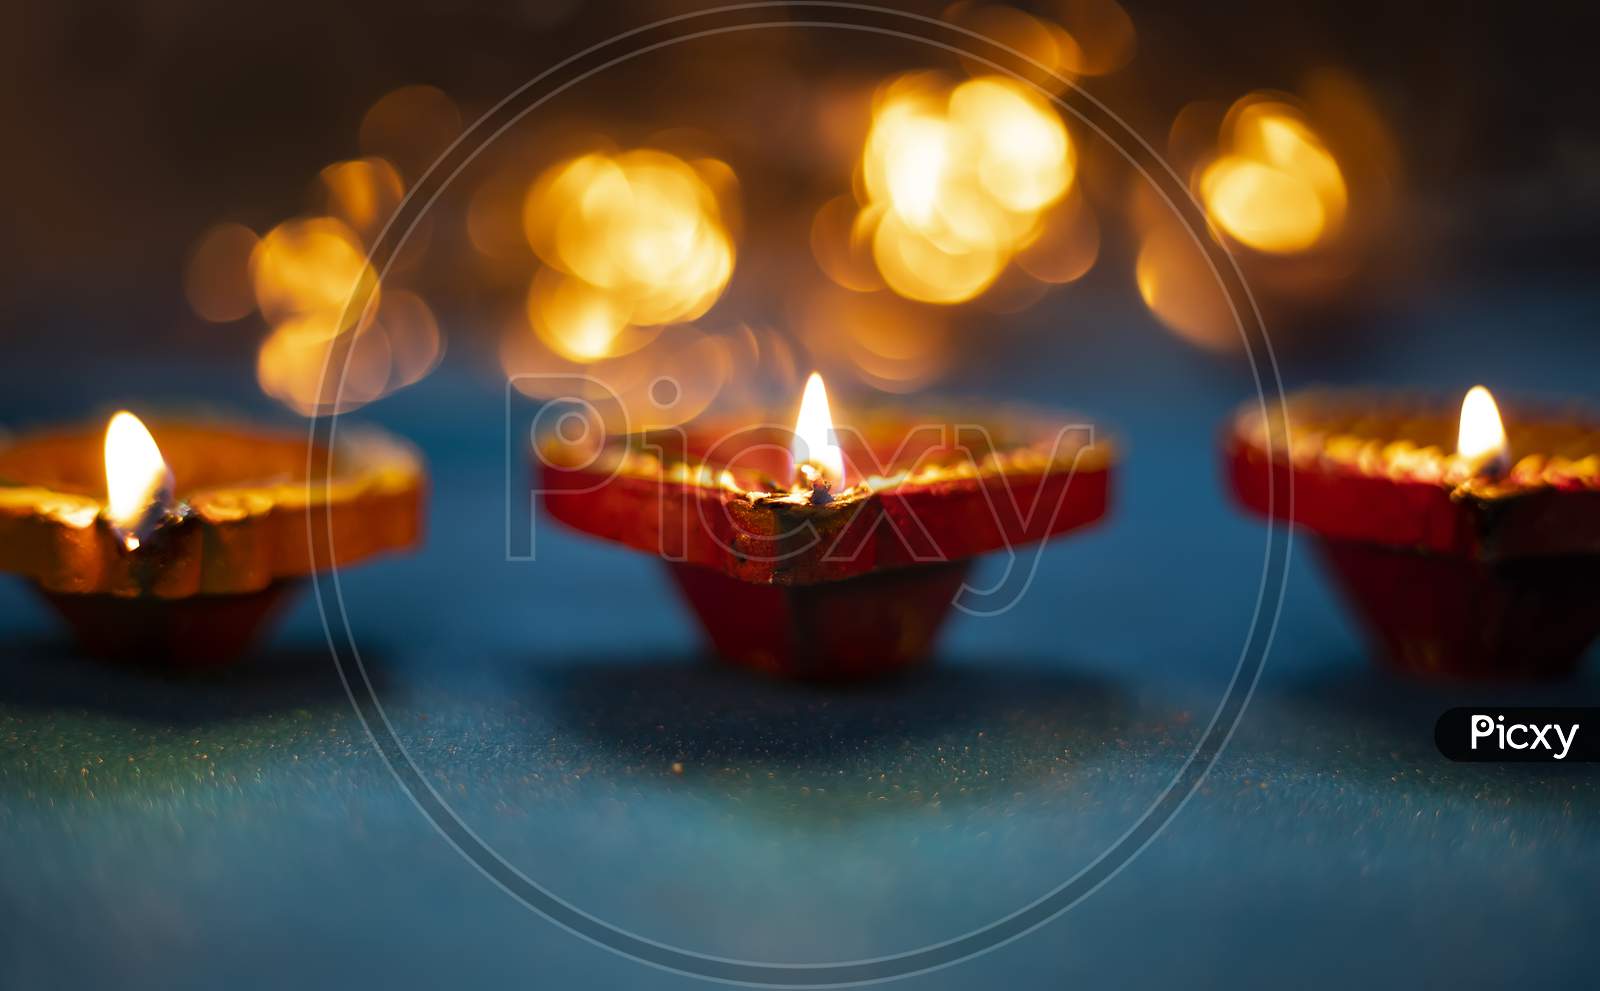 Happy Diwali - Colorful Clay Diya Lamps Lit During Diwali Celebration With Glittering Bokeh